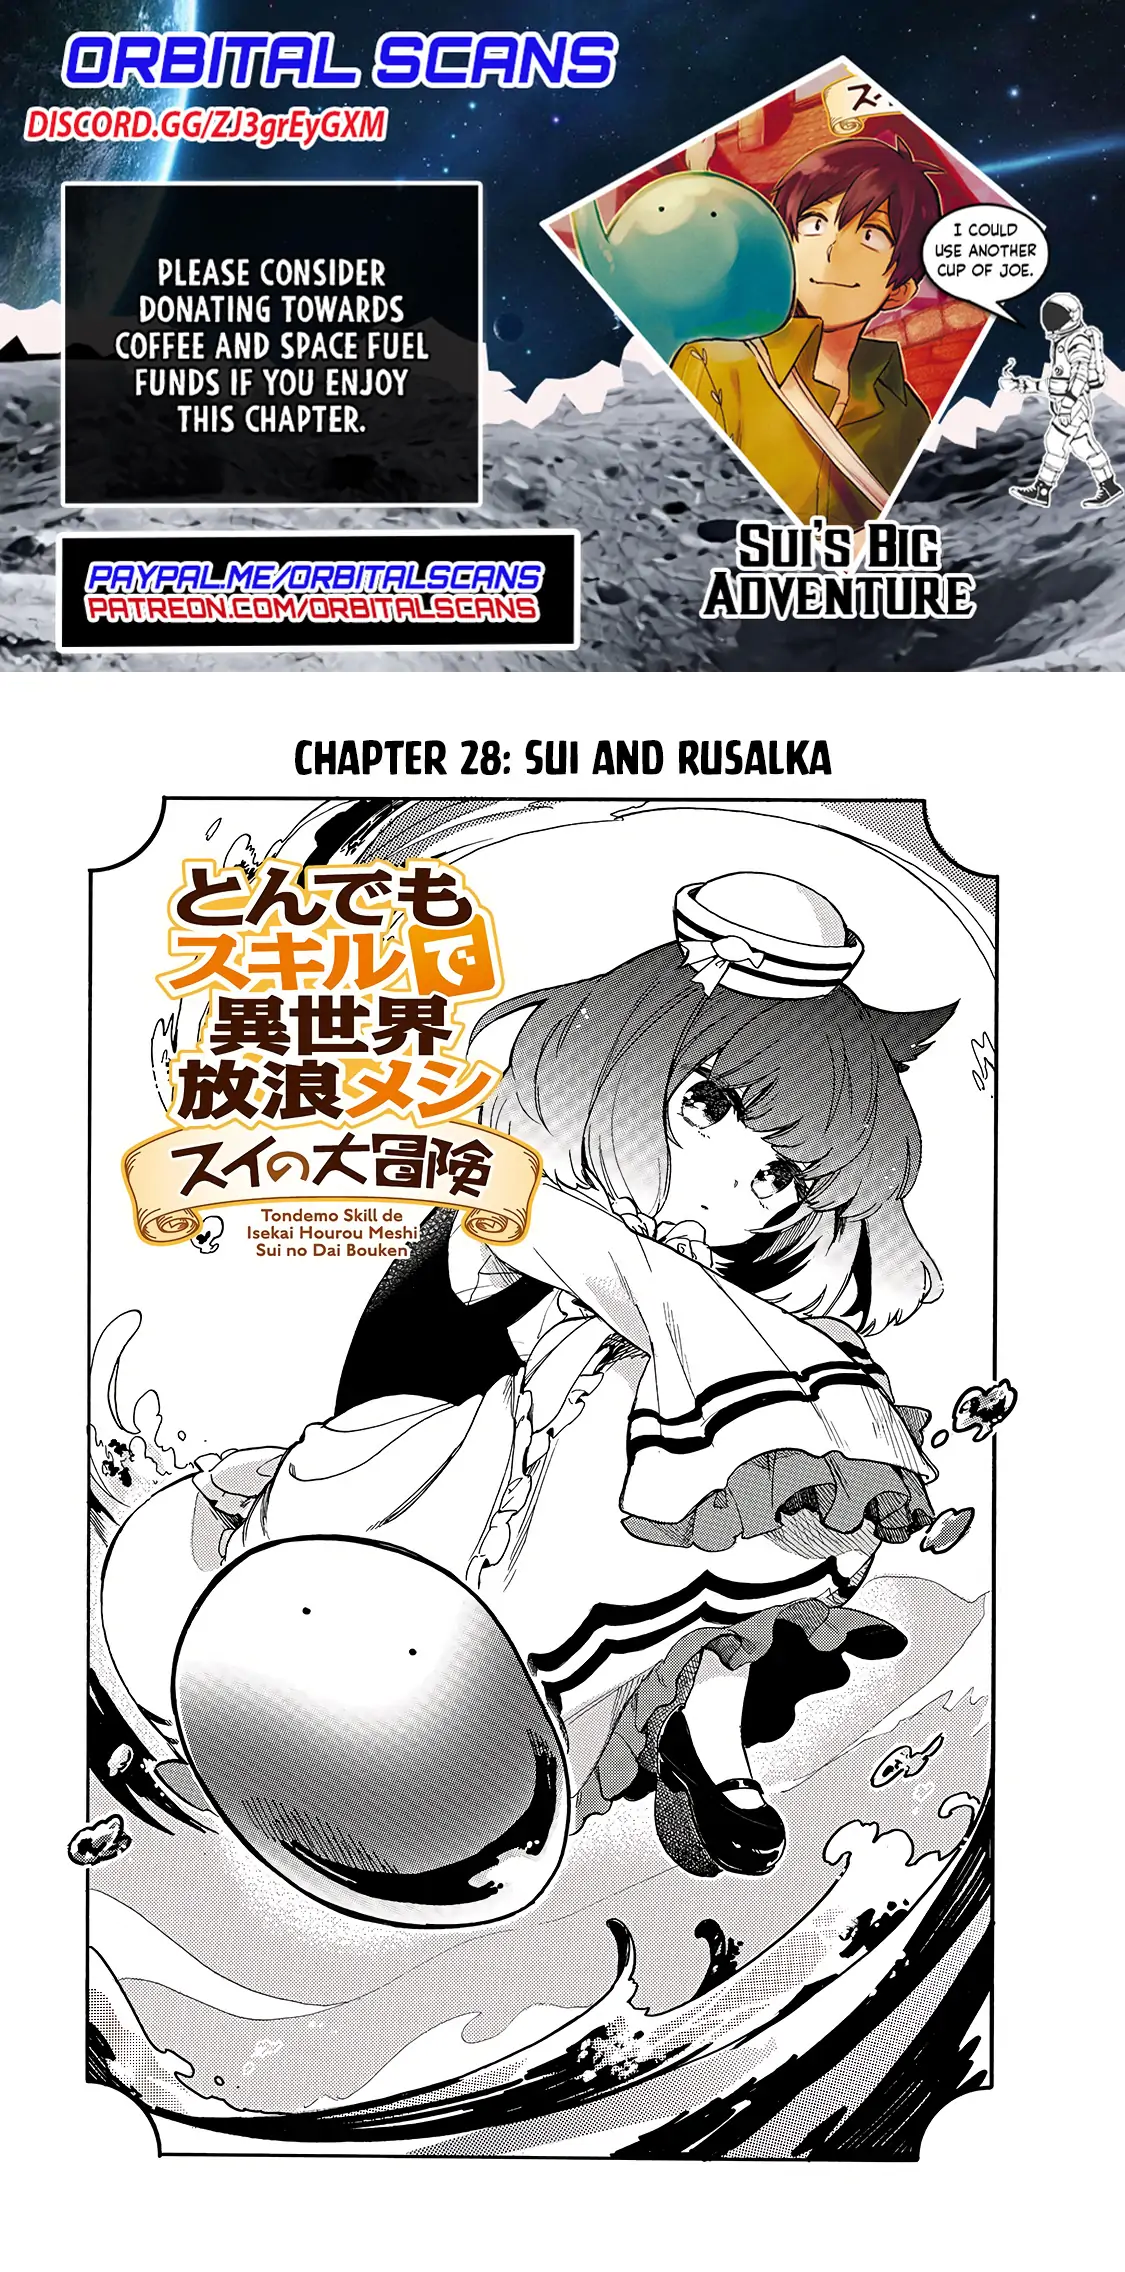 Tondemo Skill de Isekai Hourou Meshi: Sui no Daibouken - Baka-Updates Manga